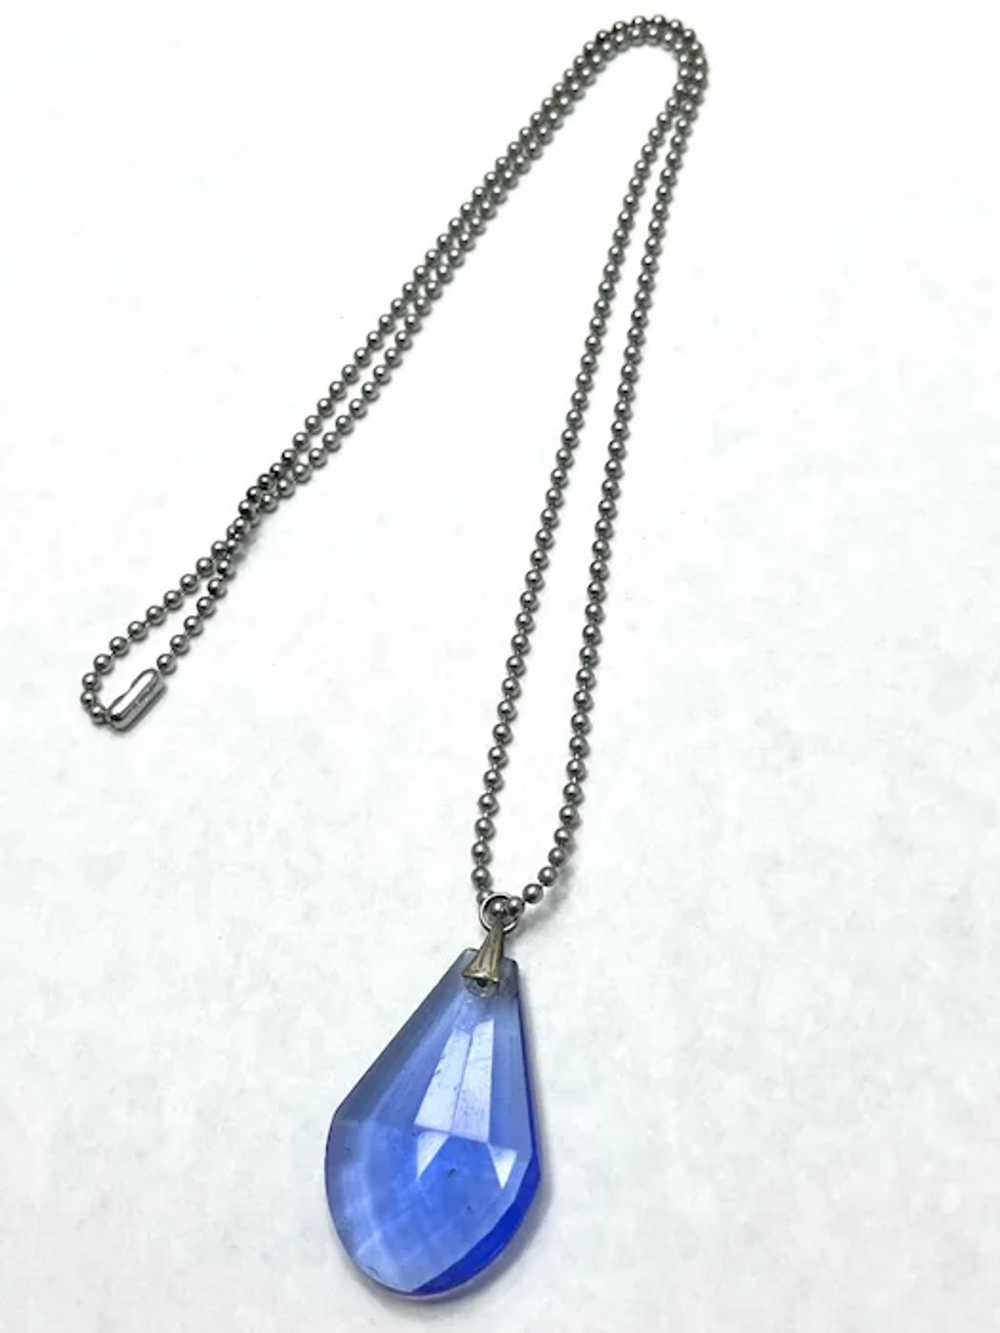 Vintage Blue Glass Faceted Pendant Necklace - image 6